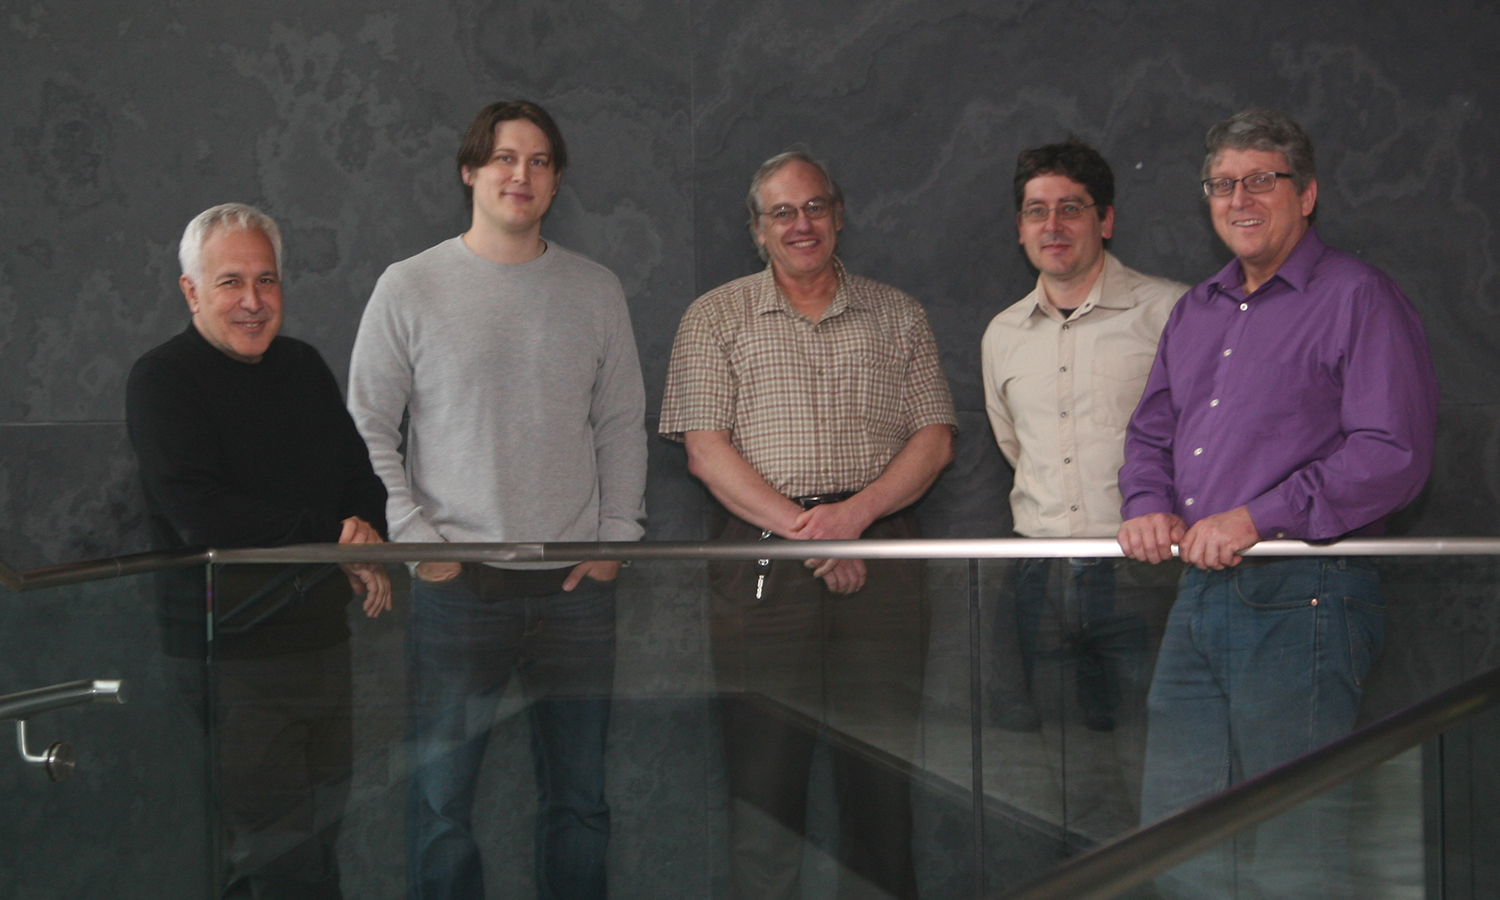  Jeff Lichtman, Josh Morgan, Jose Conchello, Daniel Berger, and Richard Schalek (Courtesy Department of Molecular and Cellular Biology) 